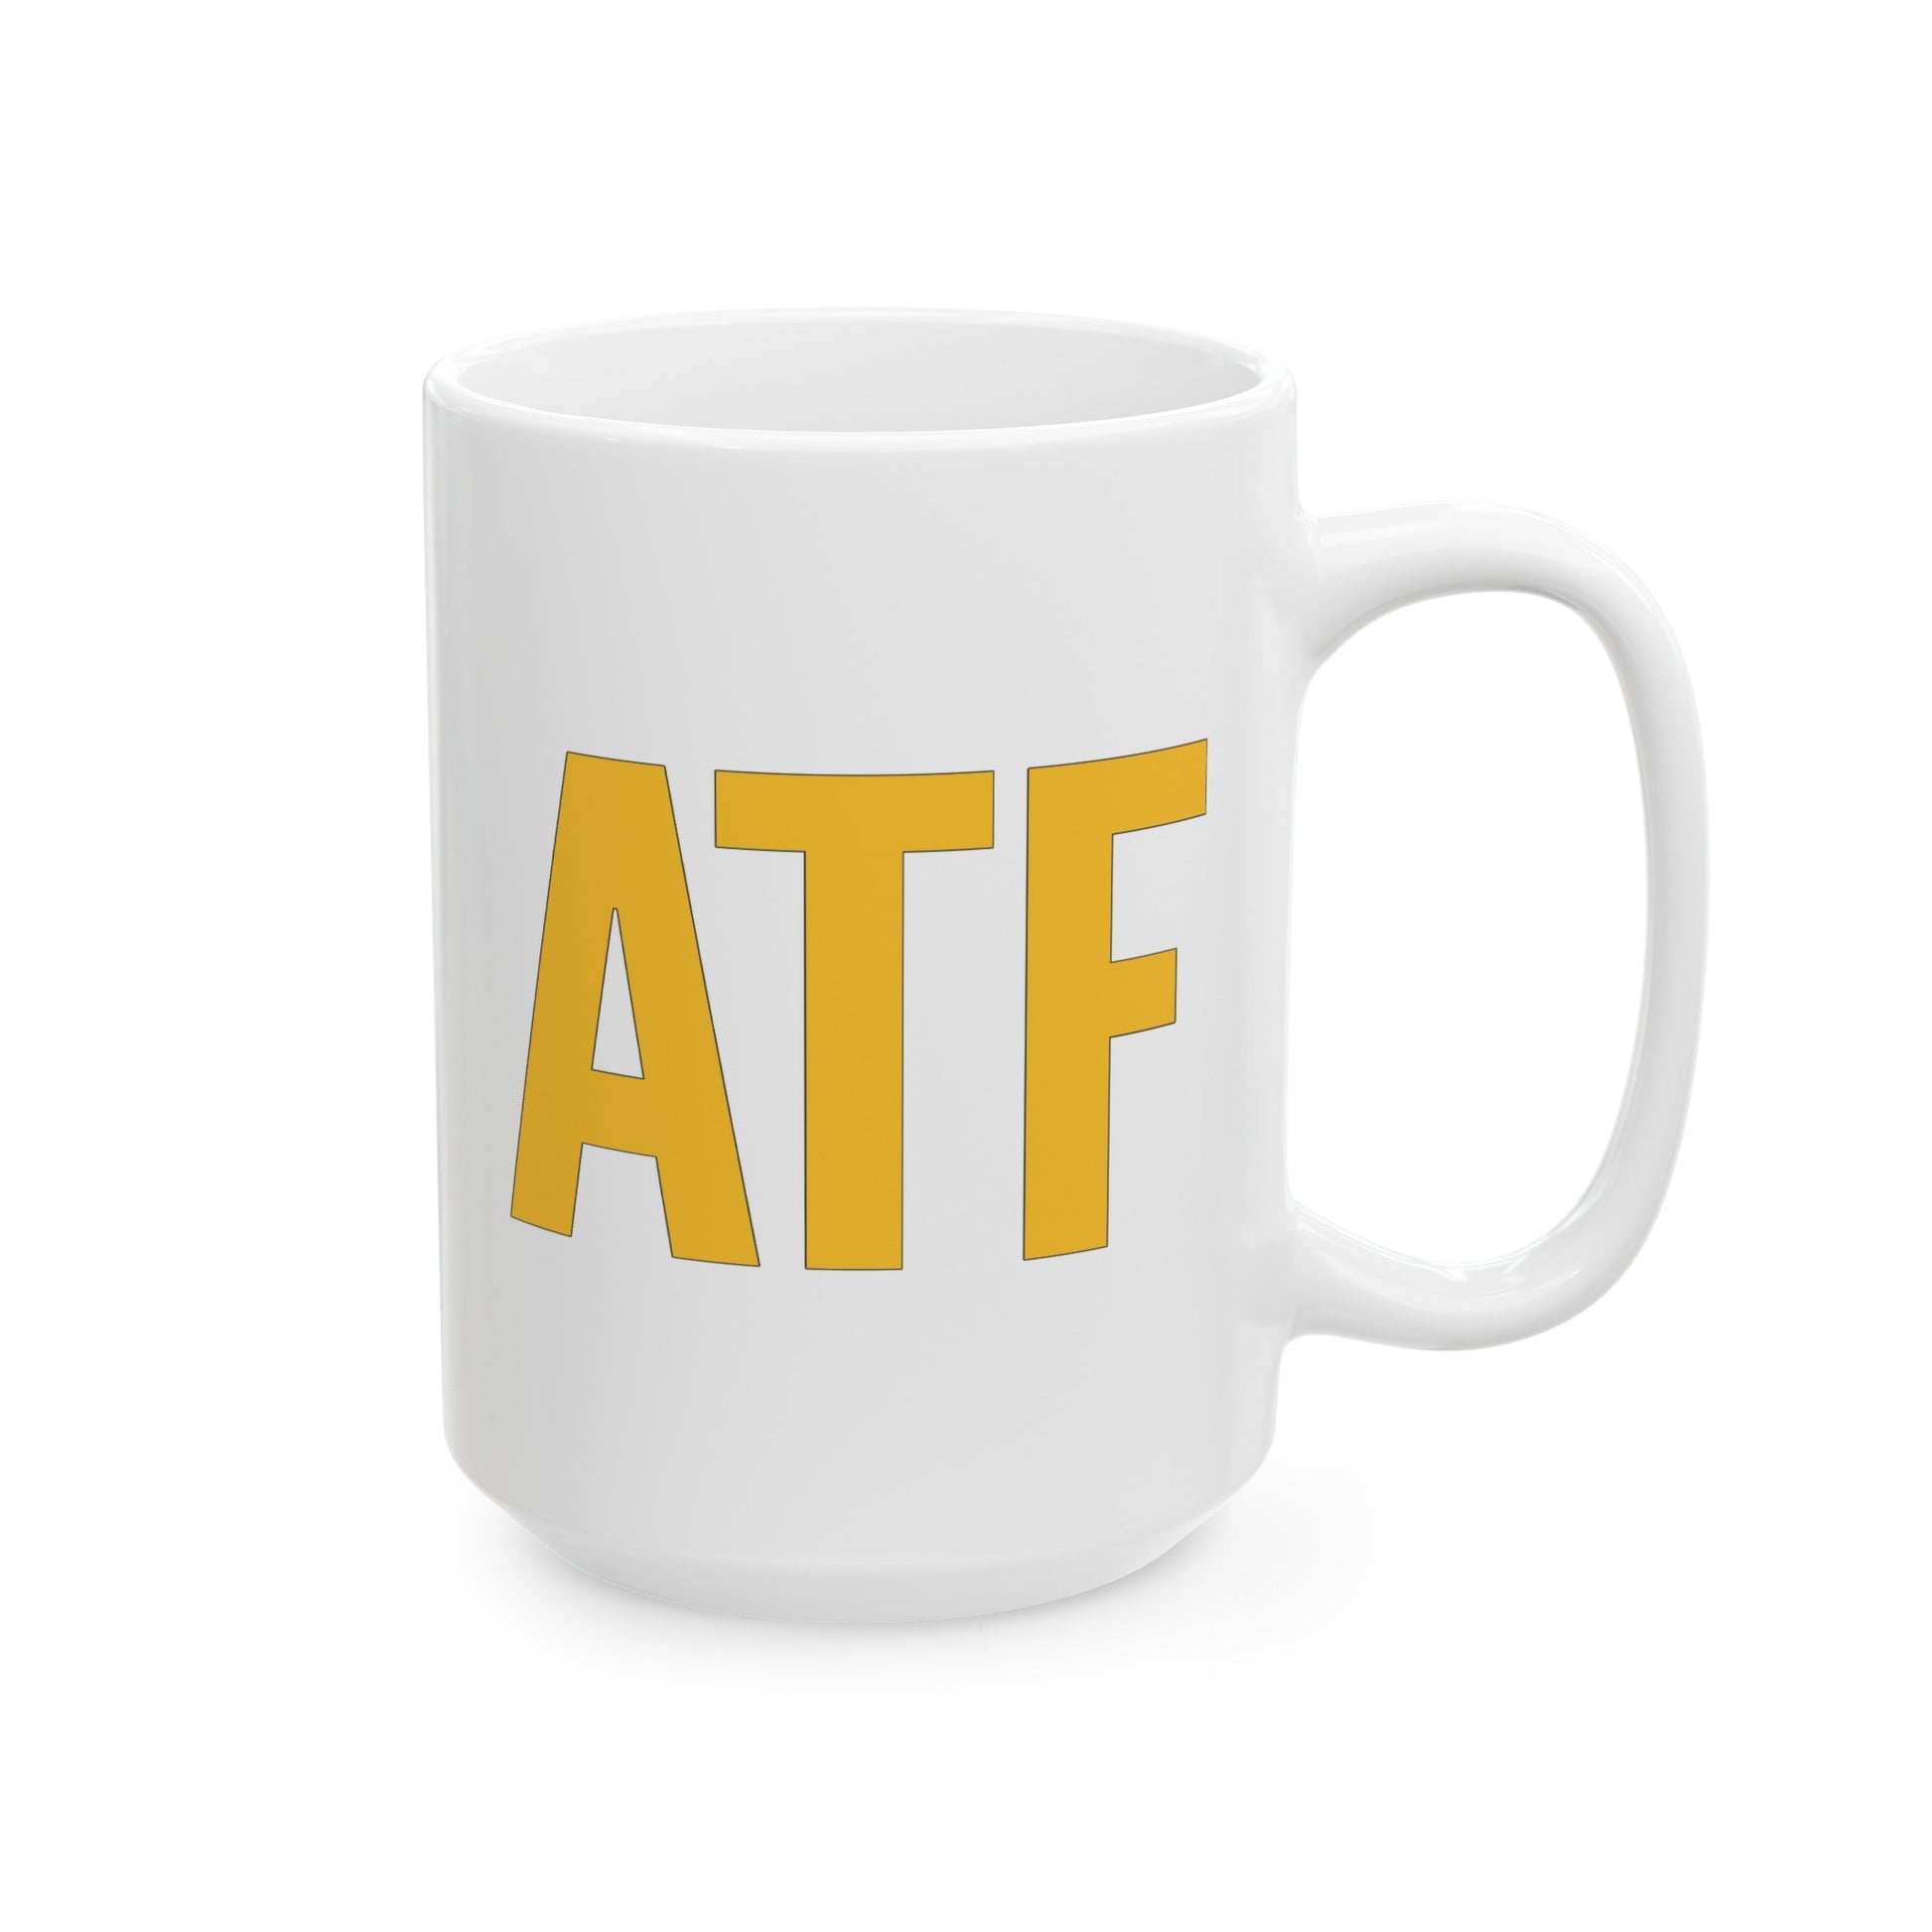 ATF Coffee Mug - Double Sided White Ceramic 15oz by TheGlassyLass.com